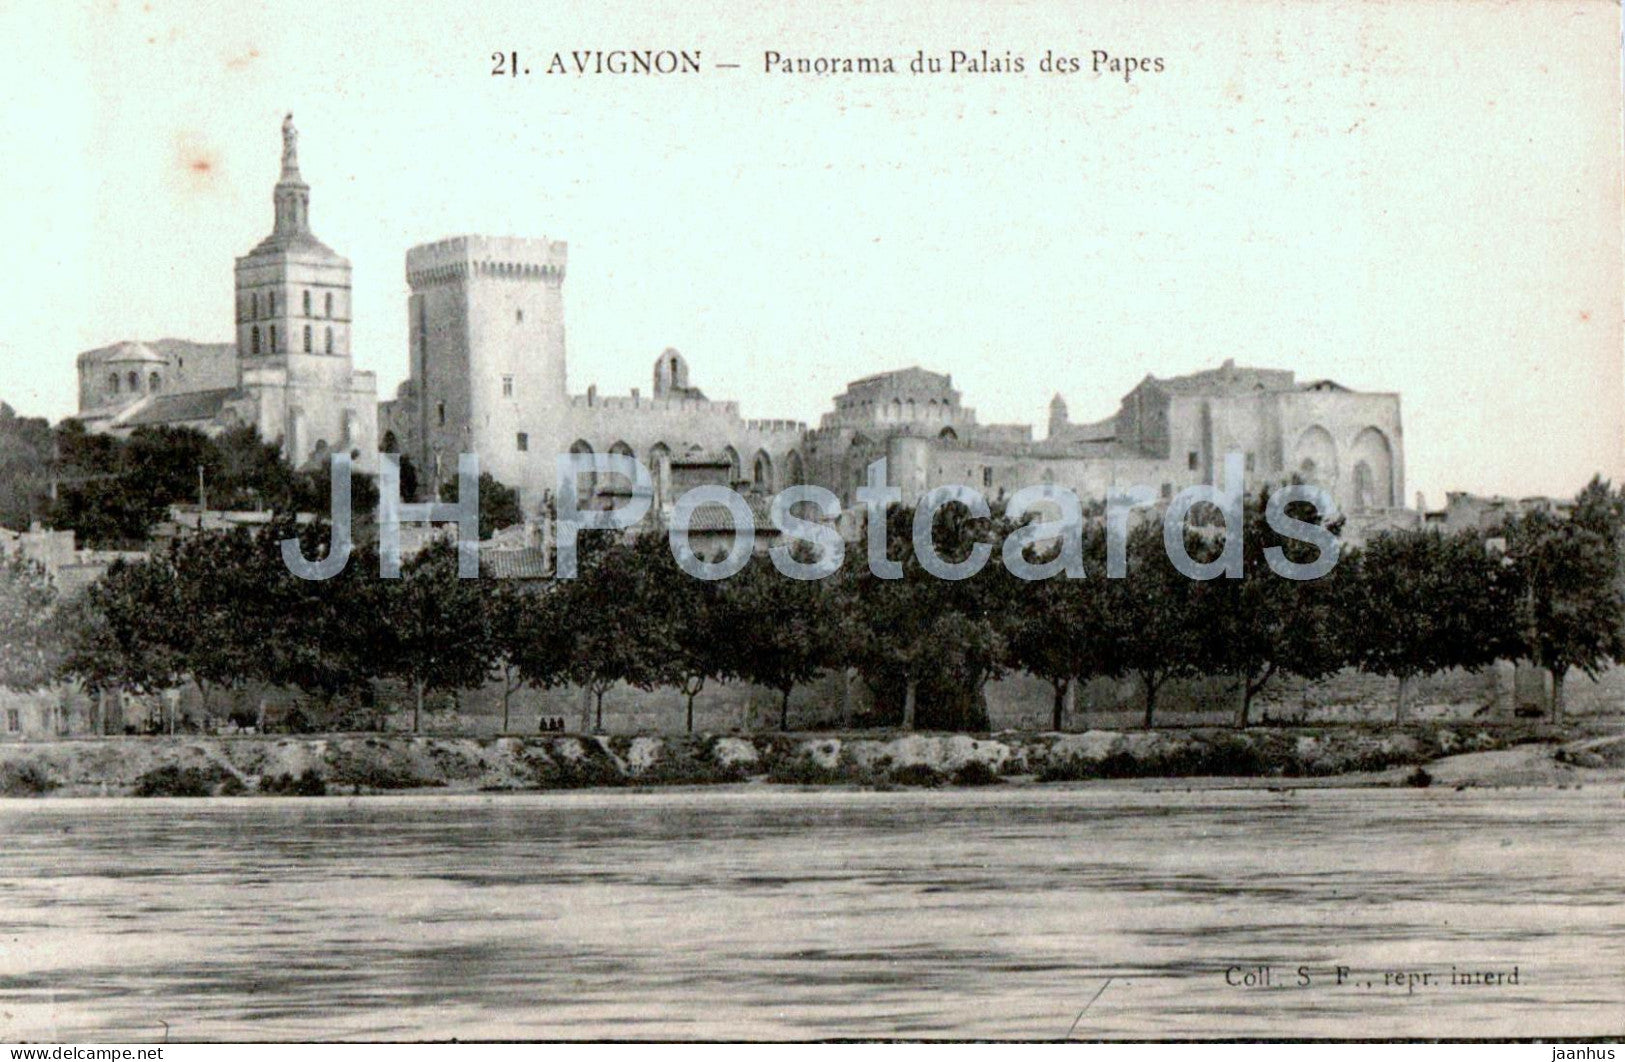 Avignon - Panorama du Palais des Papes - 21 - old postcard - 1917 - France - used - JH Postcards